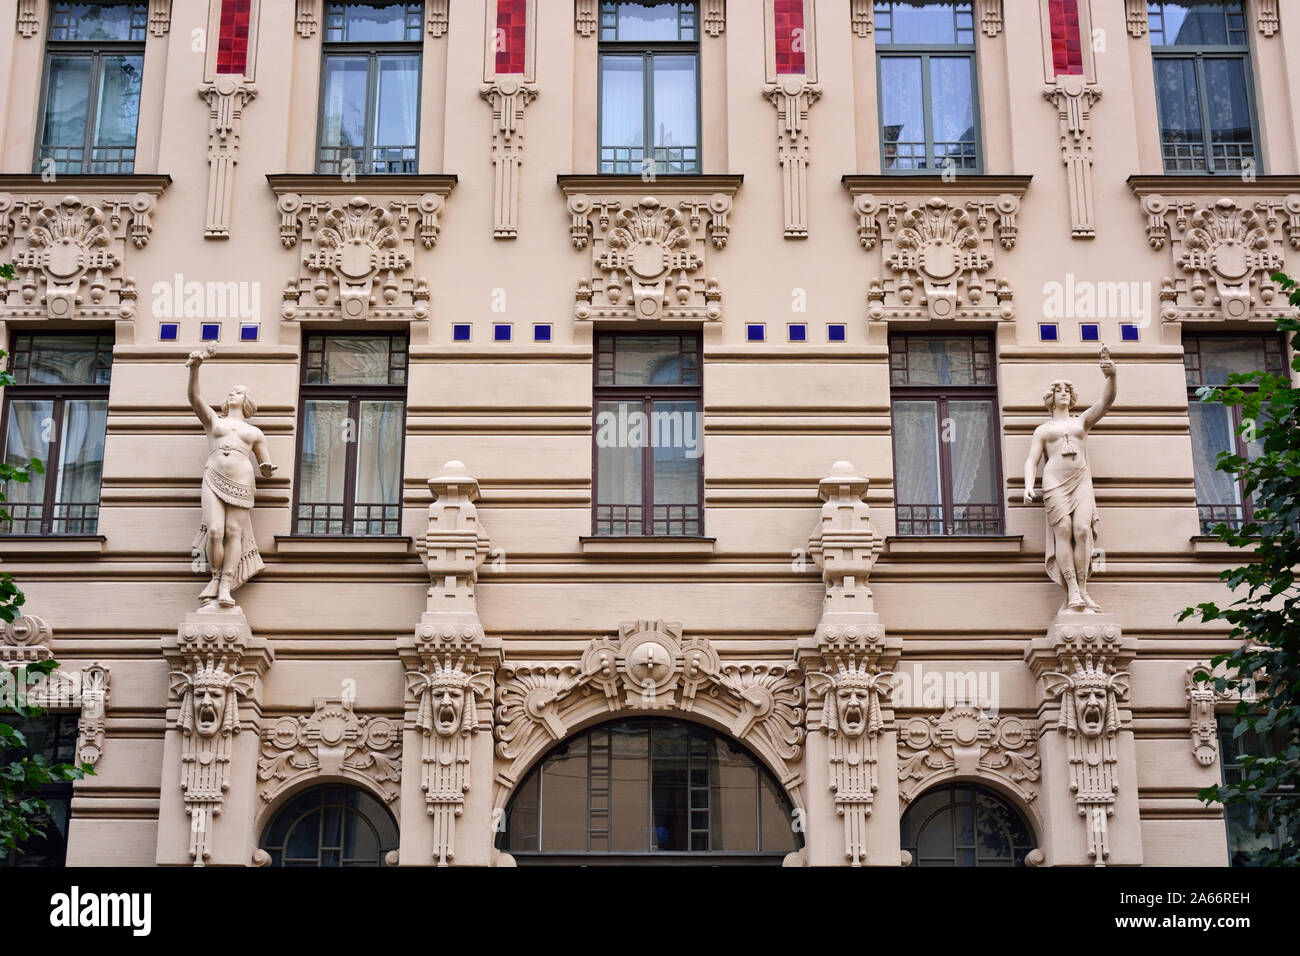 Art Nouveau architecture (Jugendstil architecture). A Unesco World Heritage Site. Riga, Latvia Stock Photo